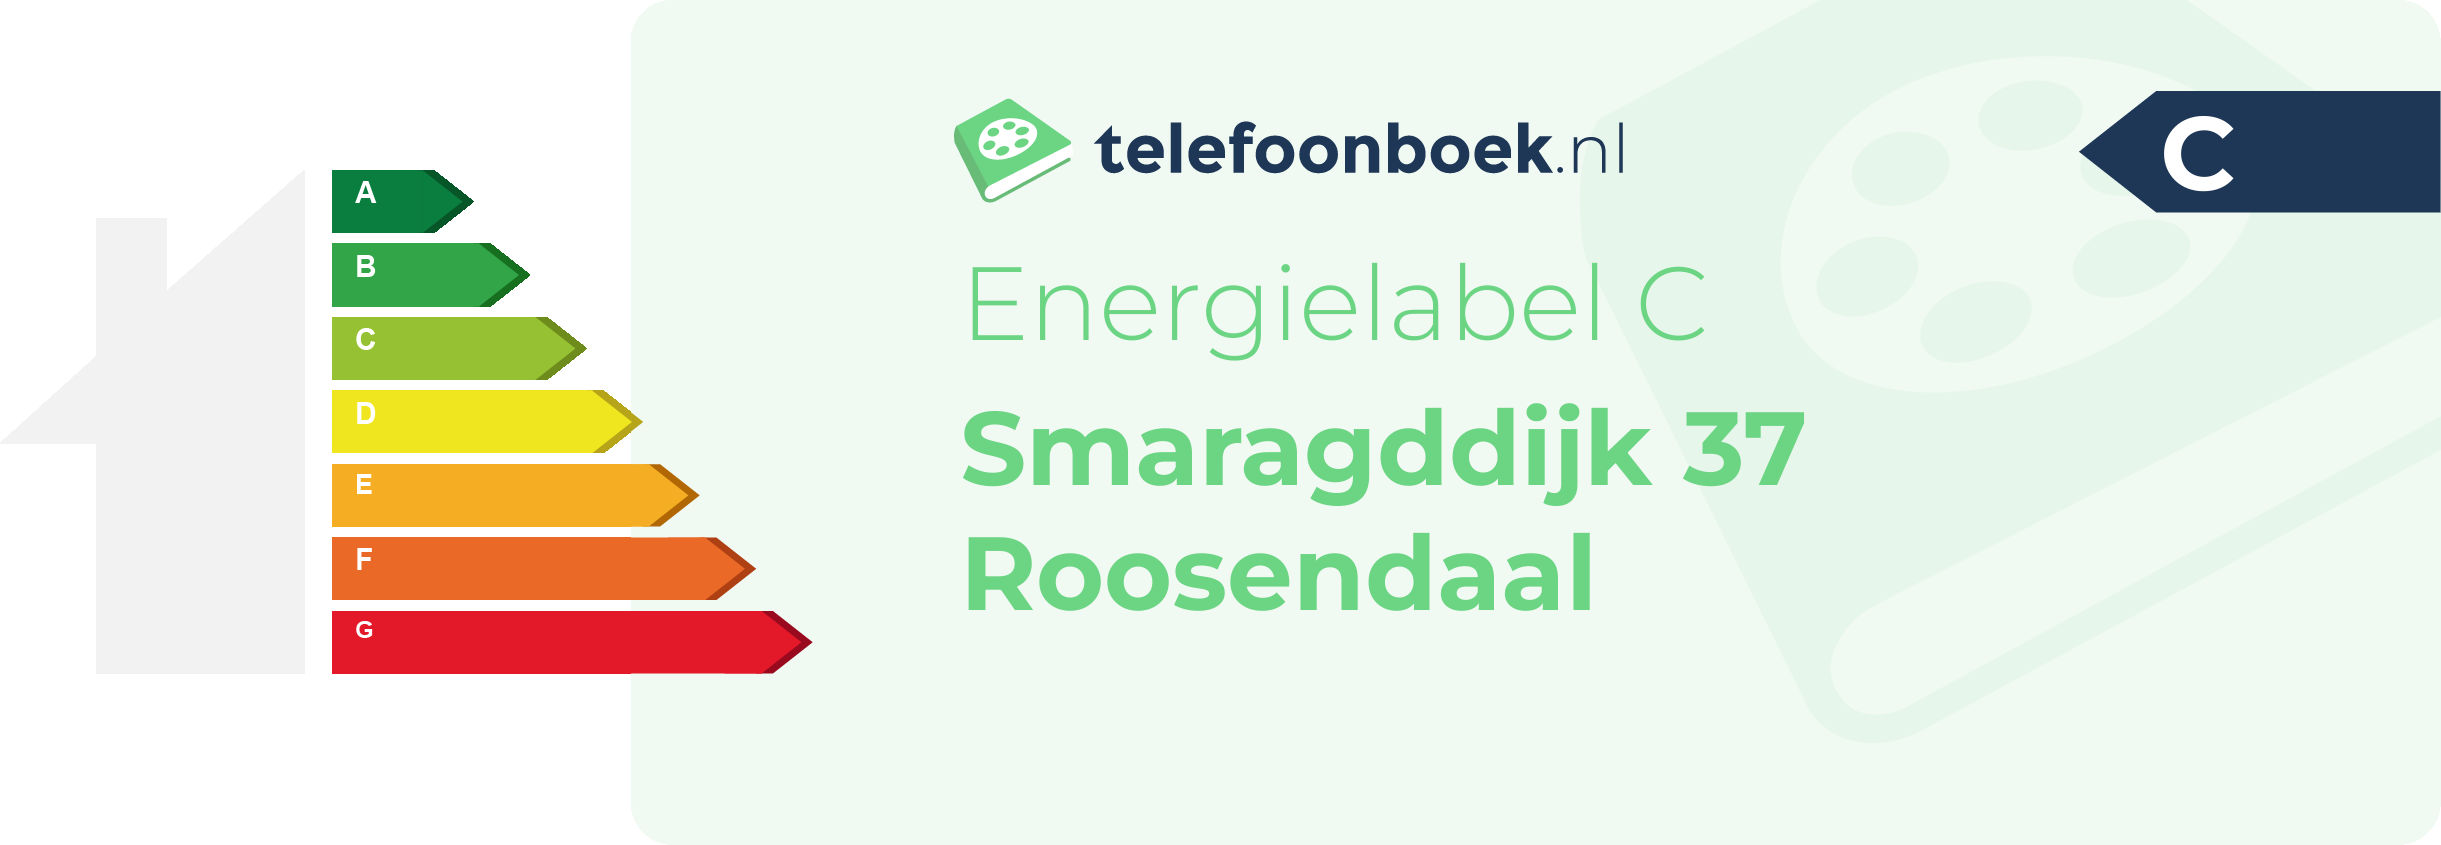 Energielabel Smaragddijk 37 Roosendaal